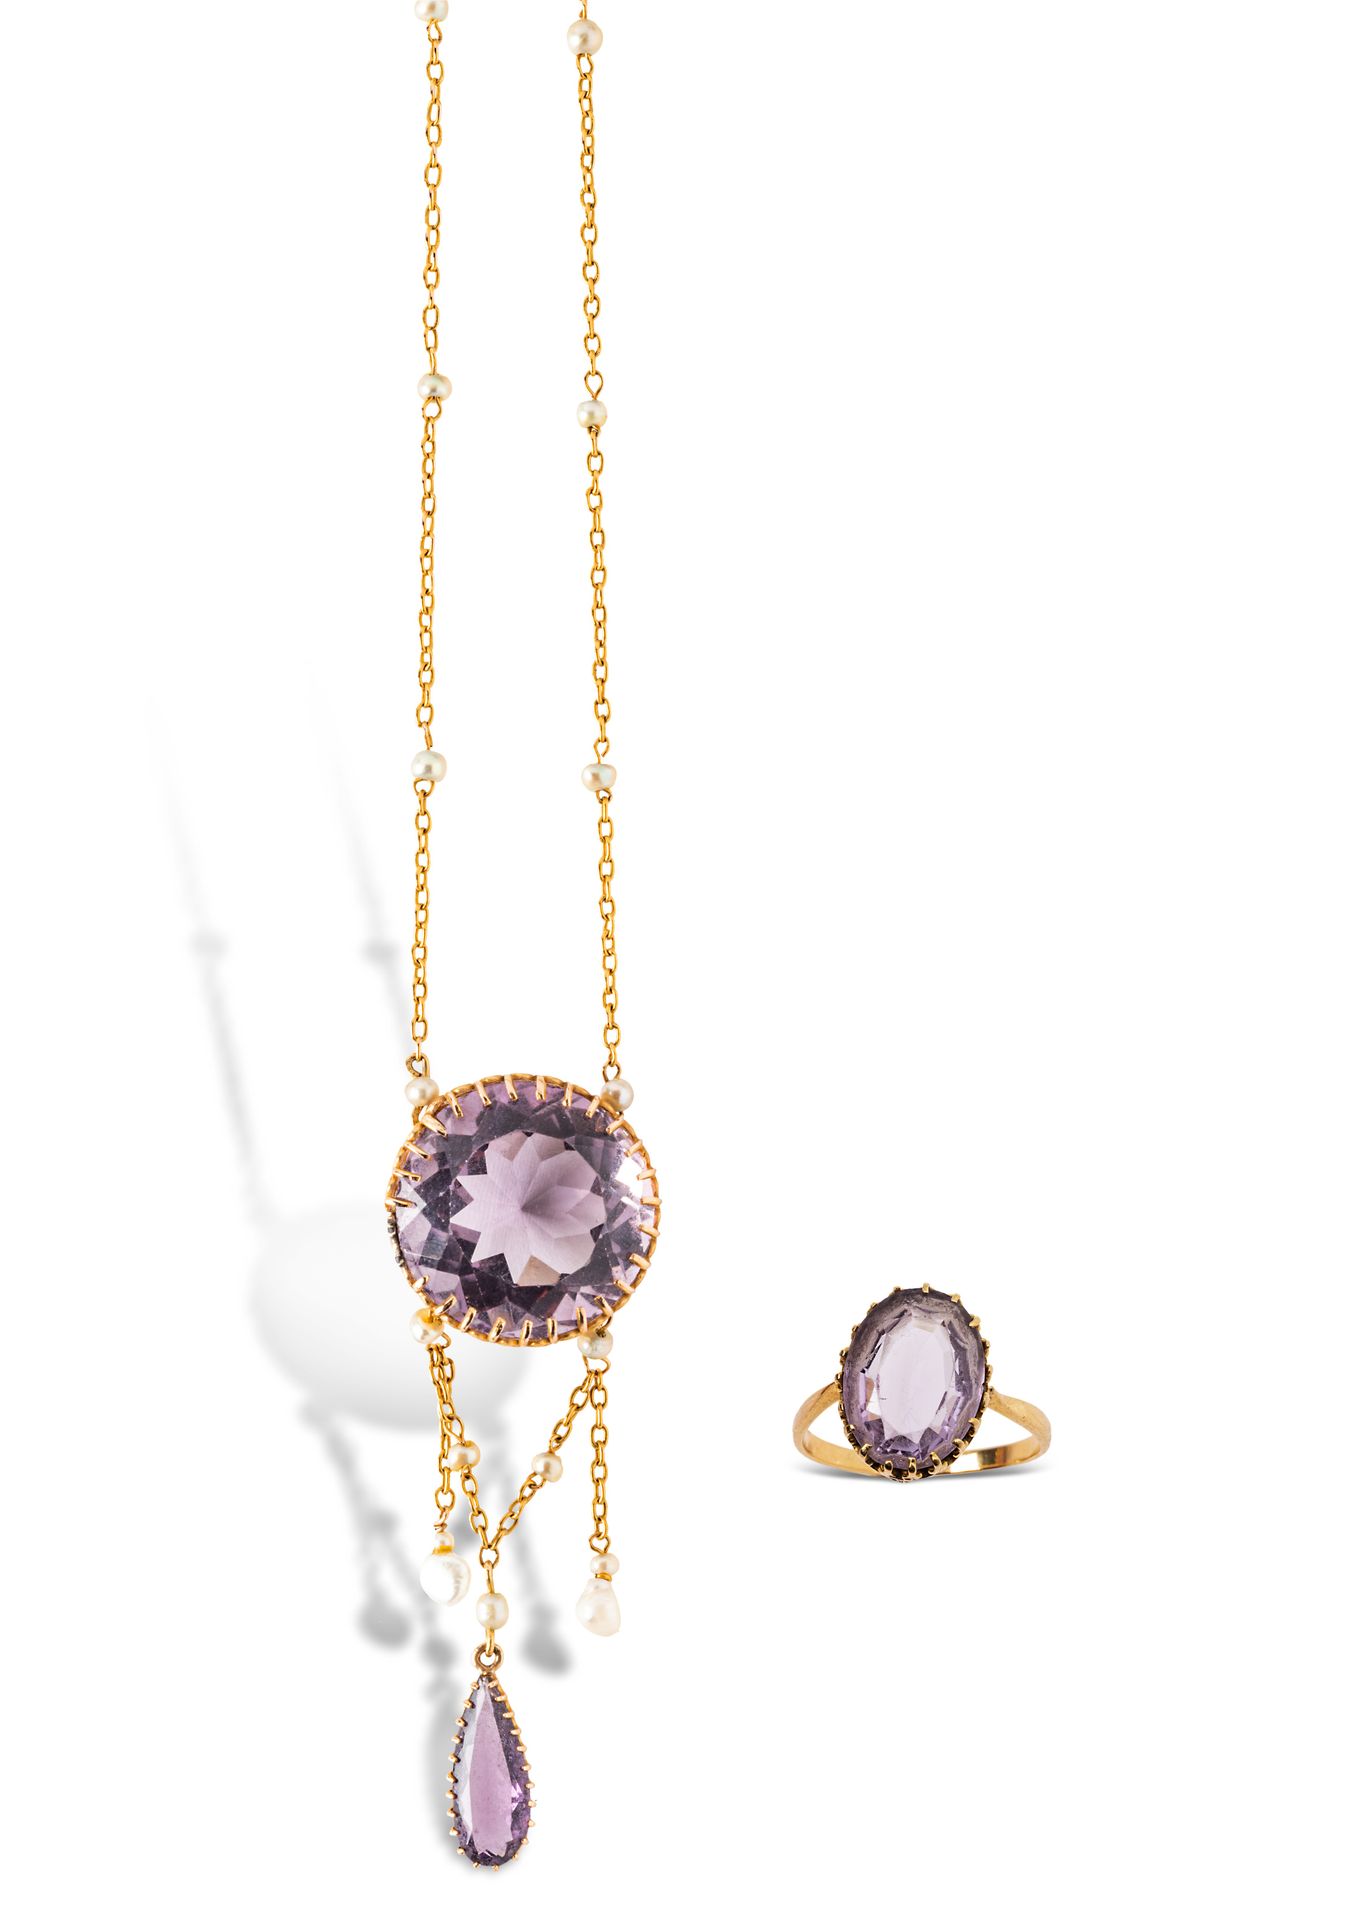 Null 18K(750)金半成品包括：一条项链，项链上镶嵌着一颗圆形紫水晶，吊坠上有一颗水滴形紫水晶，上面装饰着小珍珠，一枚18K金戒指上镶嵌着一颗紫水晶。
&hellip;